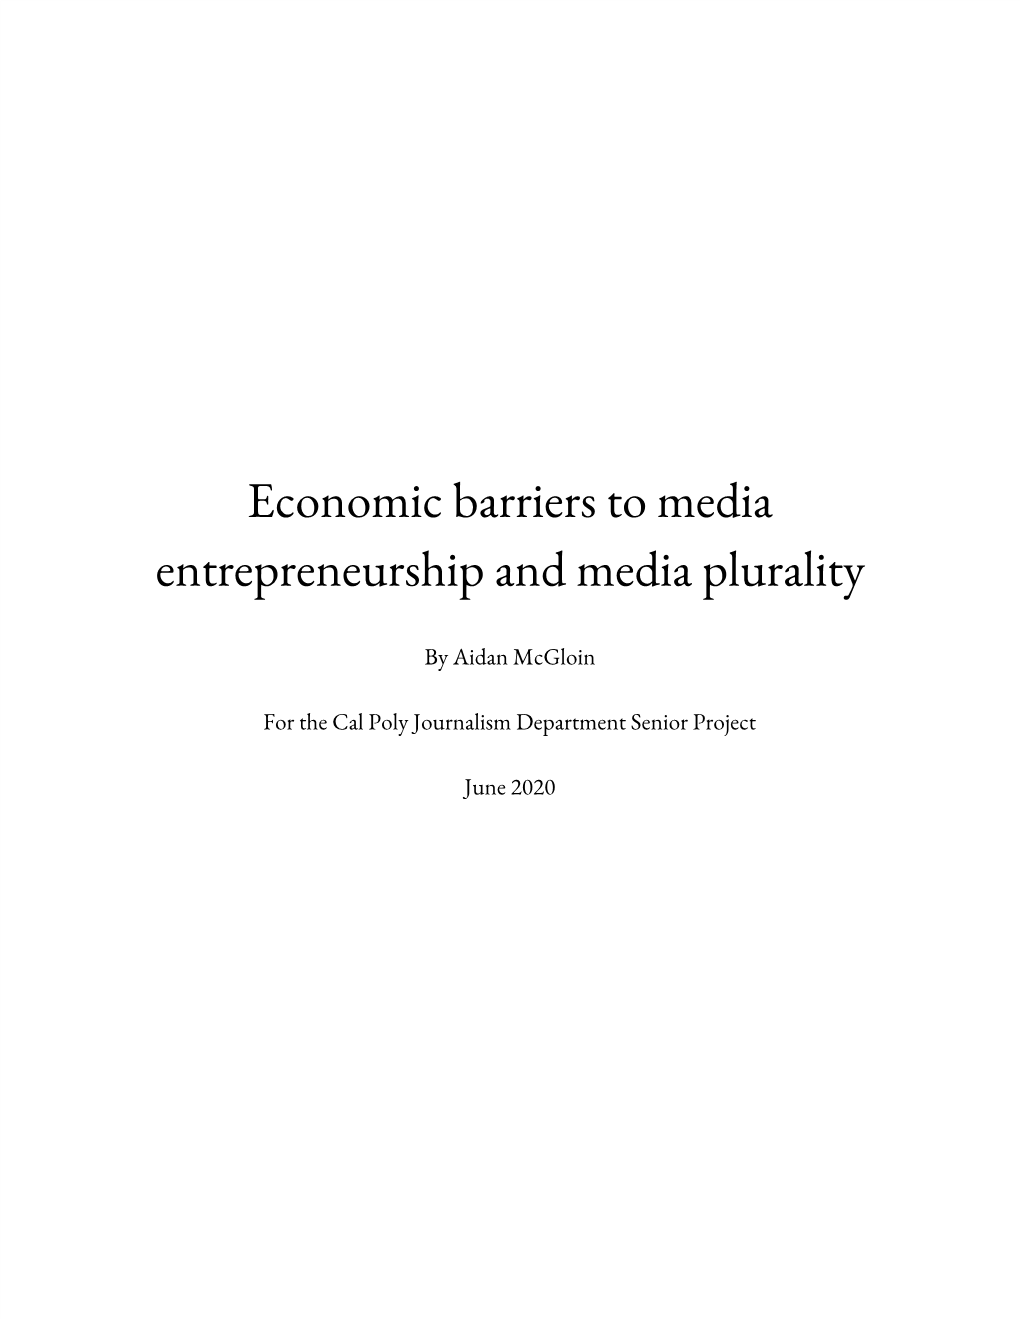 Economic Barriers to Media Entrepreneurship and Media Plurality